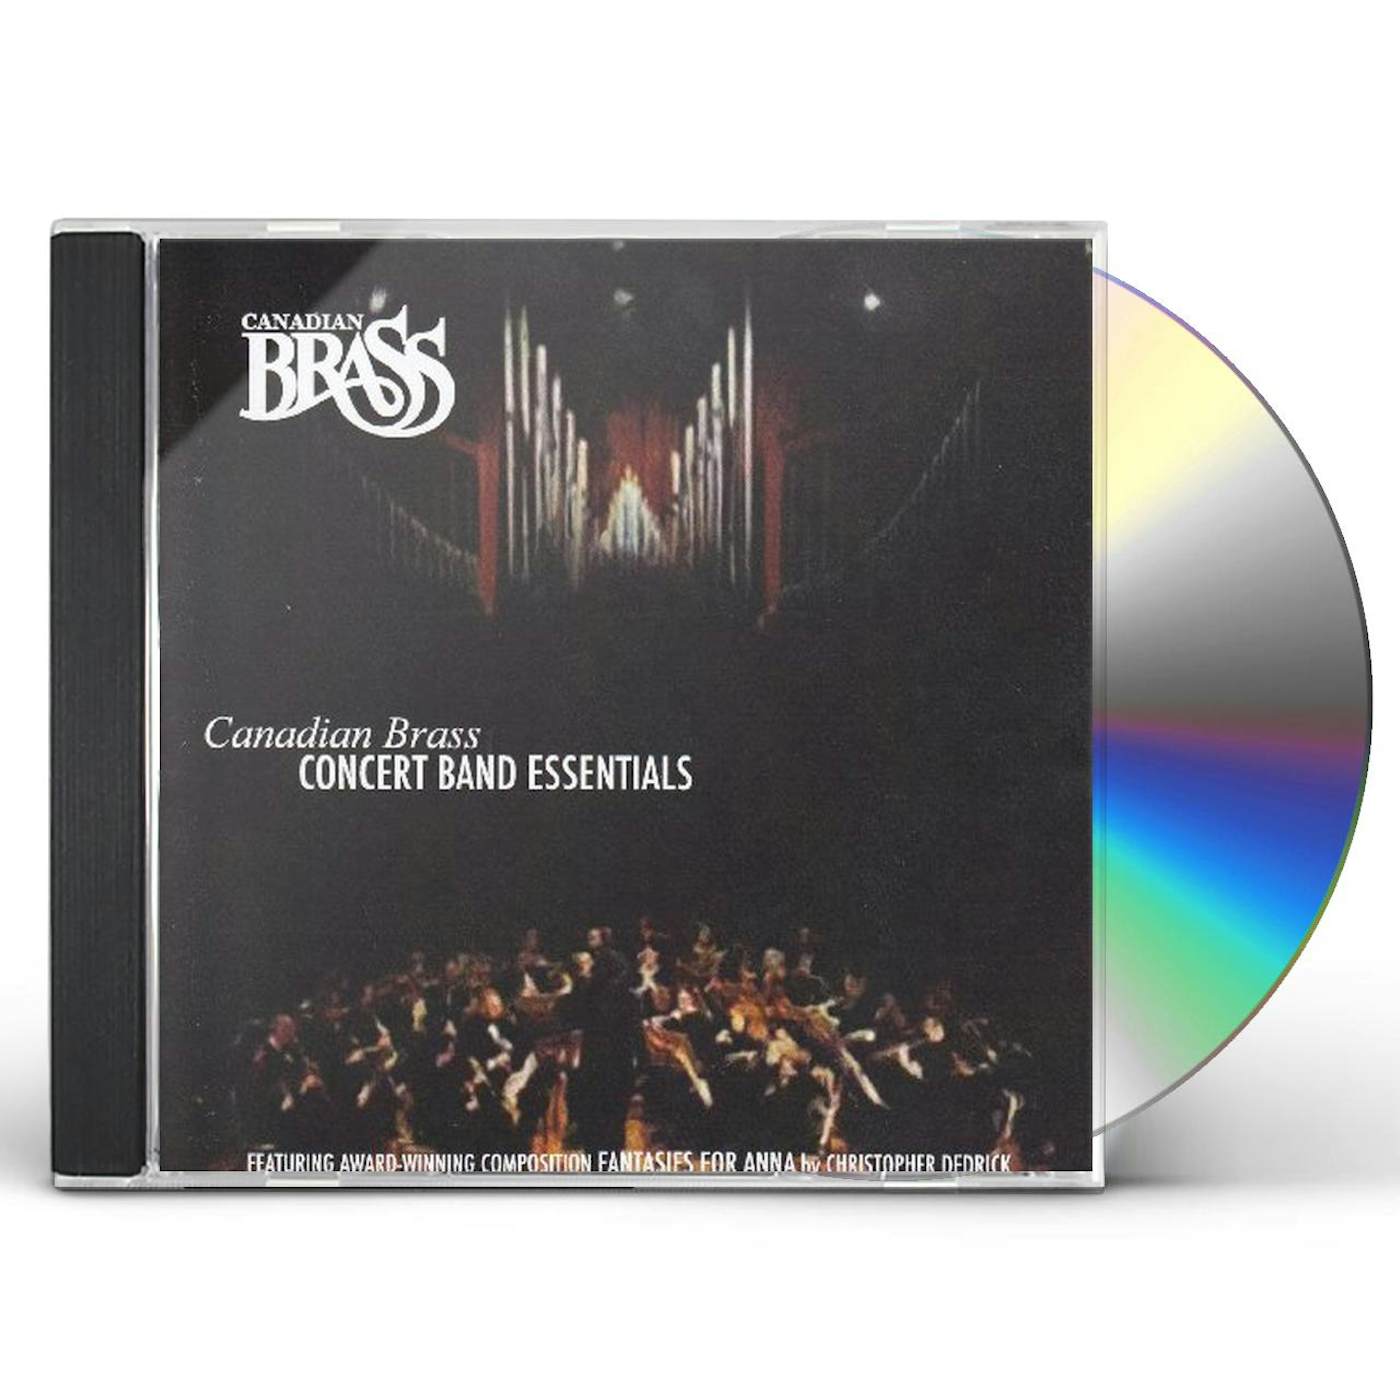 Canadian Brass CONCERT BAND ESSENTIALS CD